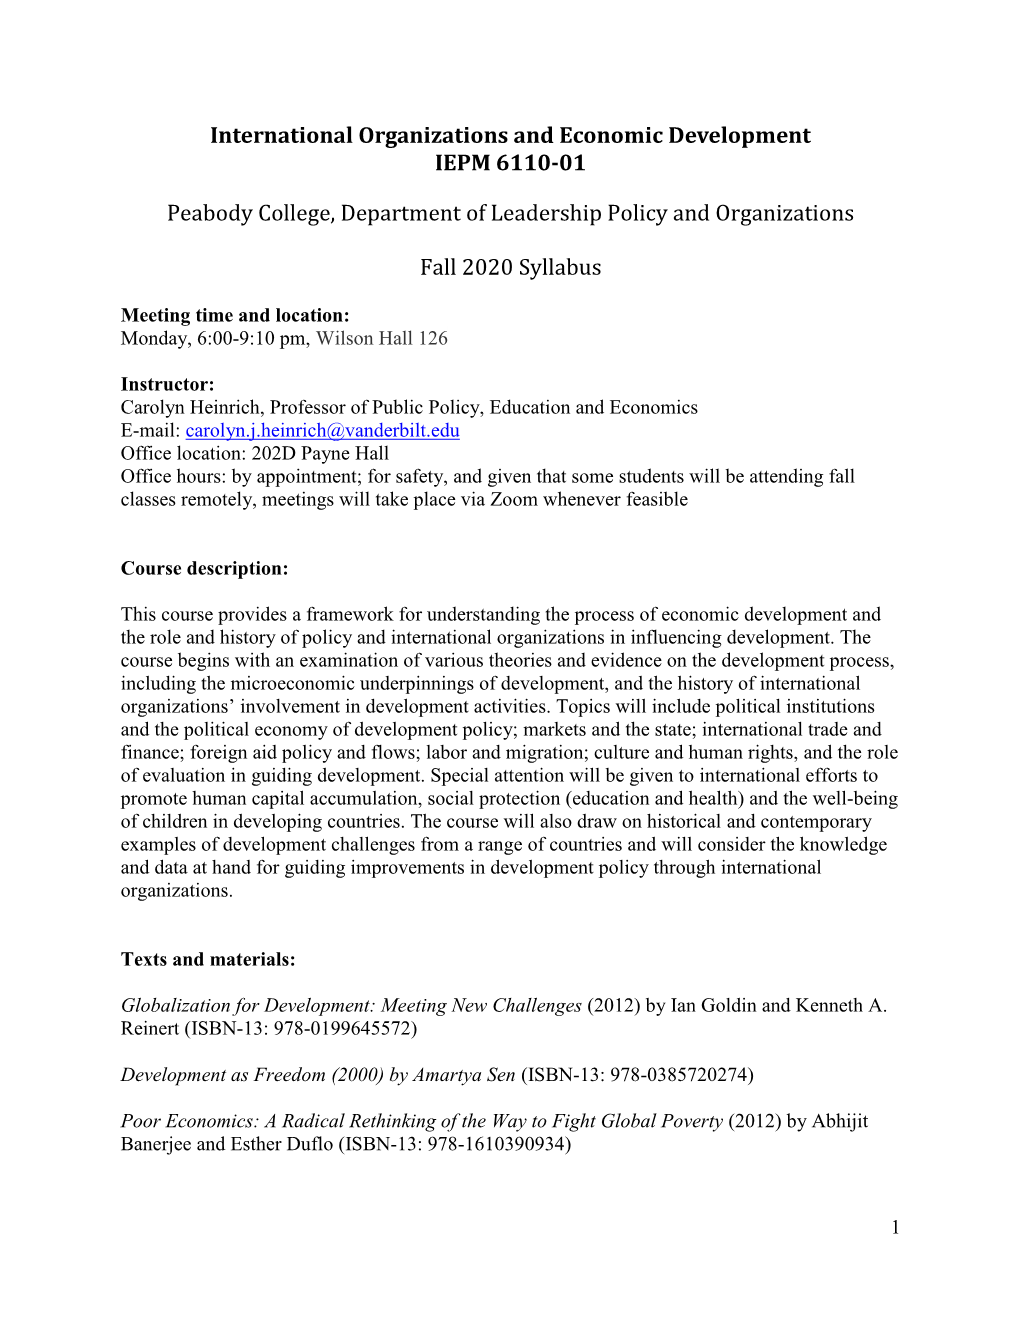 International Organizations and Economic Development IEPM 6110-01 Peabody College, Department of Leadership Policy and Organizat